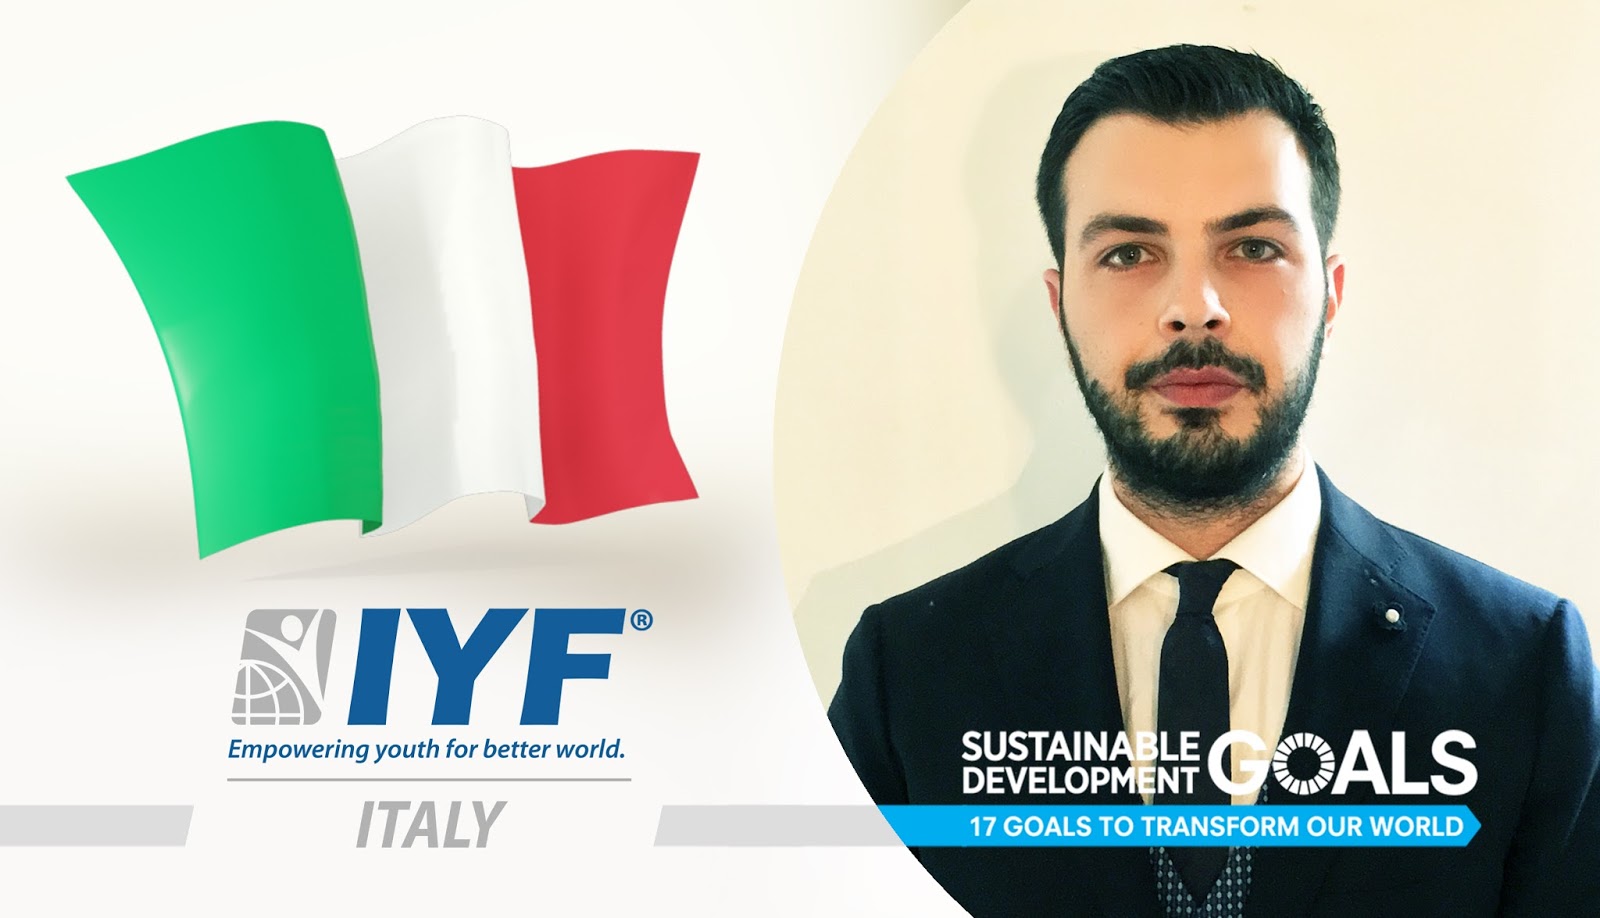 Angelo Ferro, IYF Representative in Italy